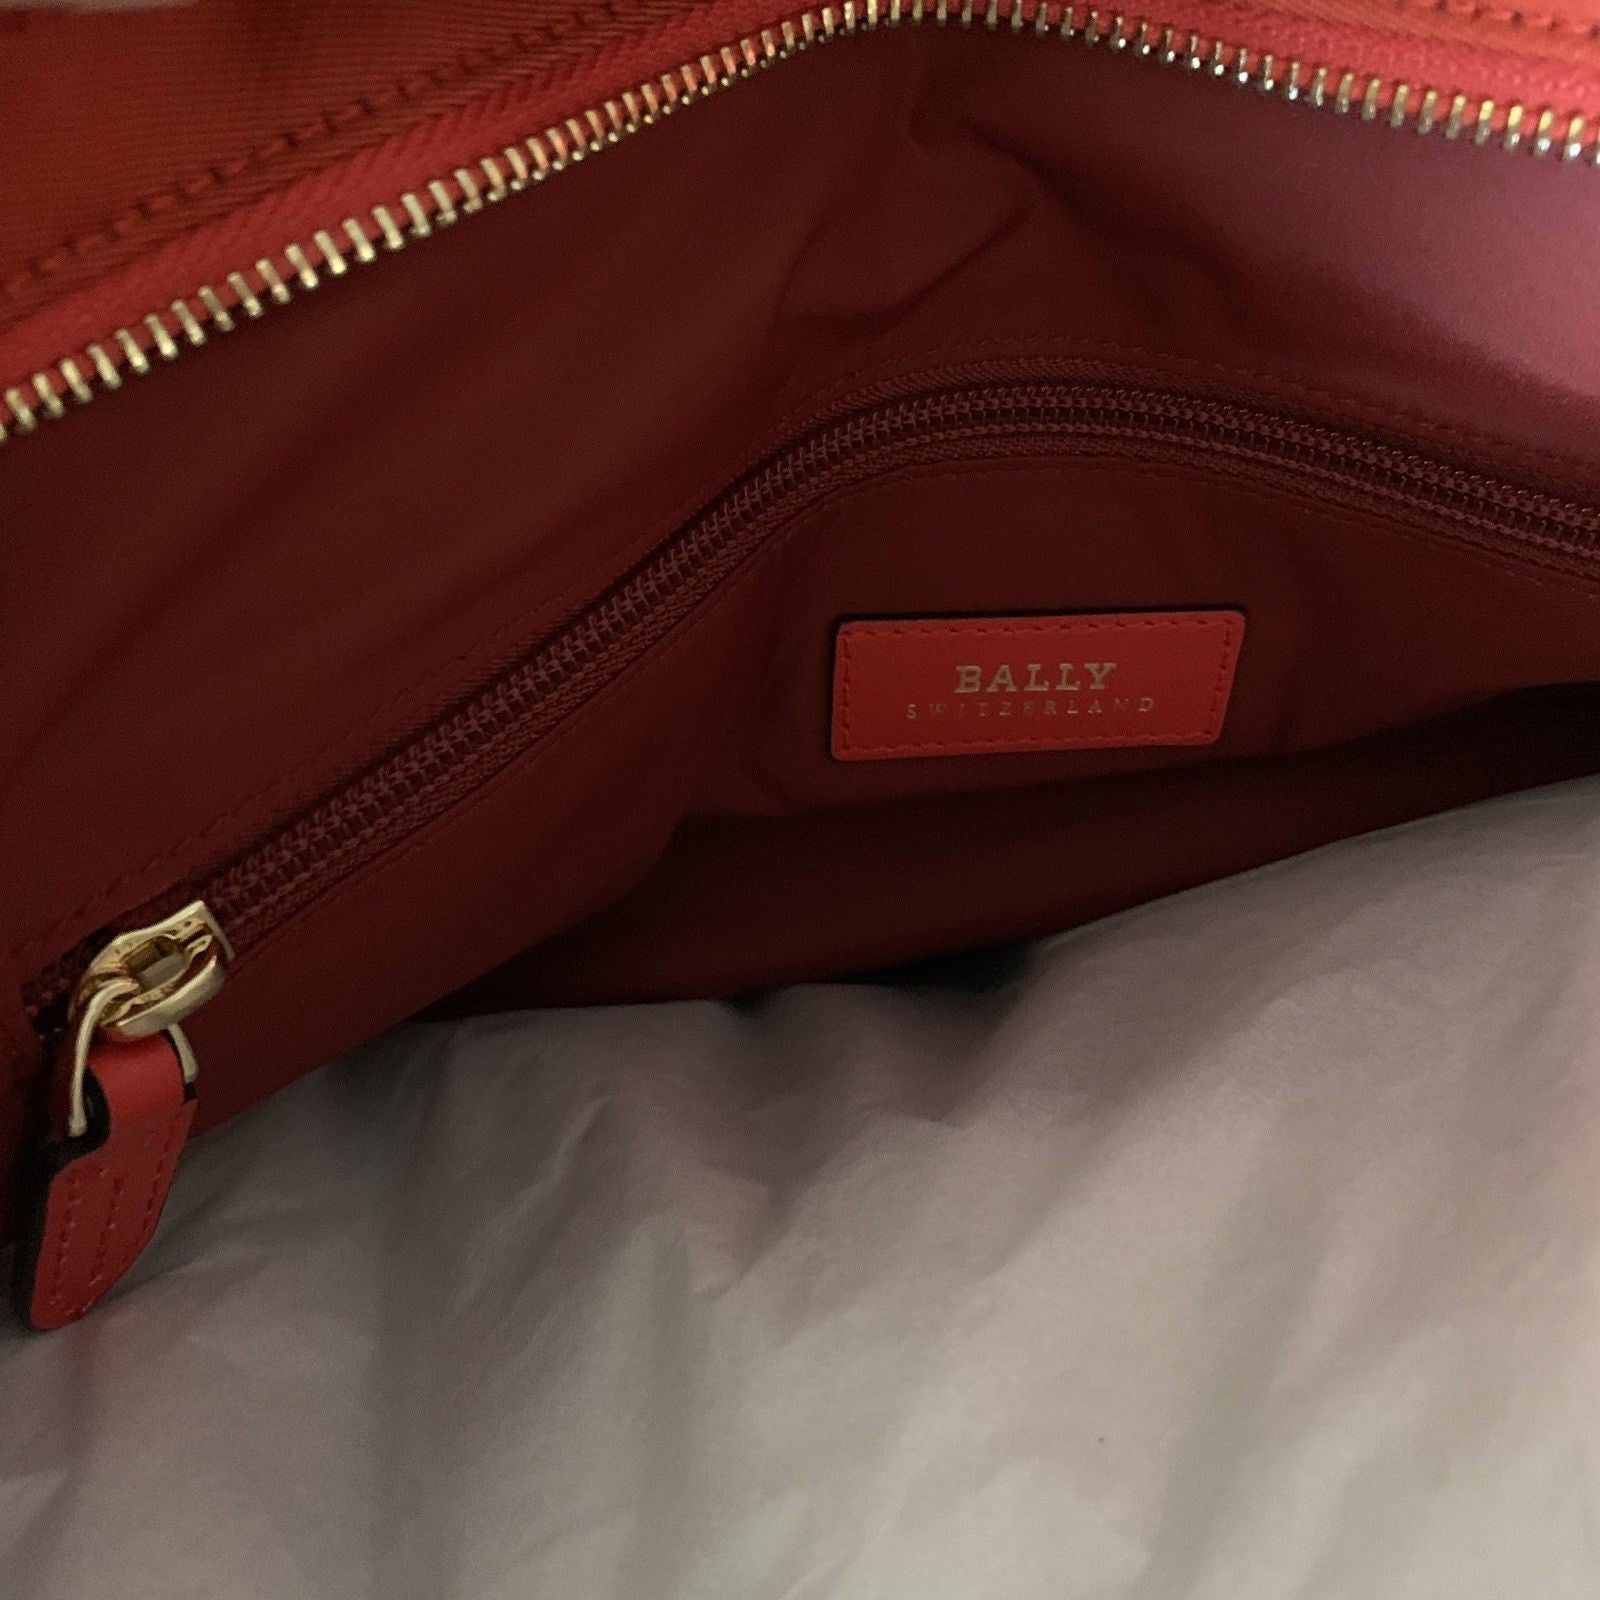 New $542 Bally Calibri Women’s Nylon Leather Handbag Bag Red 6215581 Switza